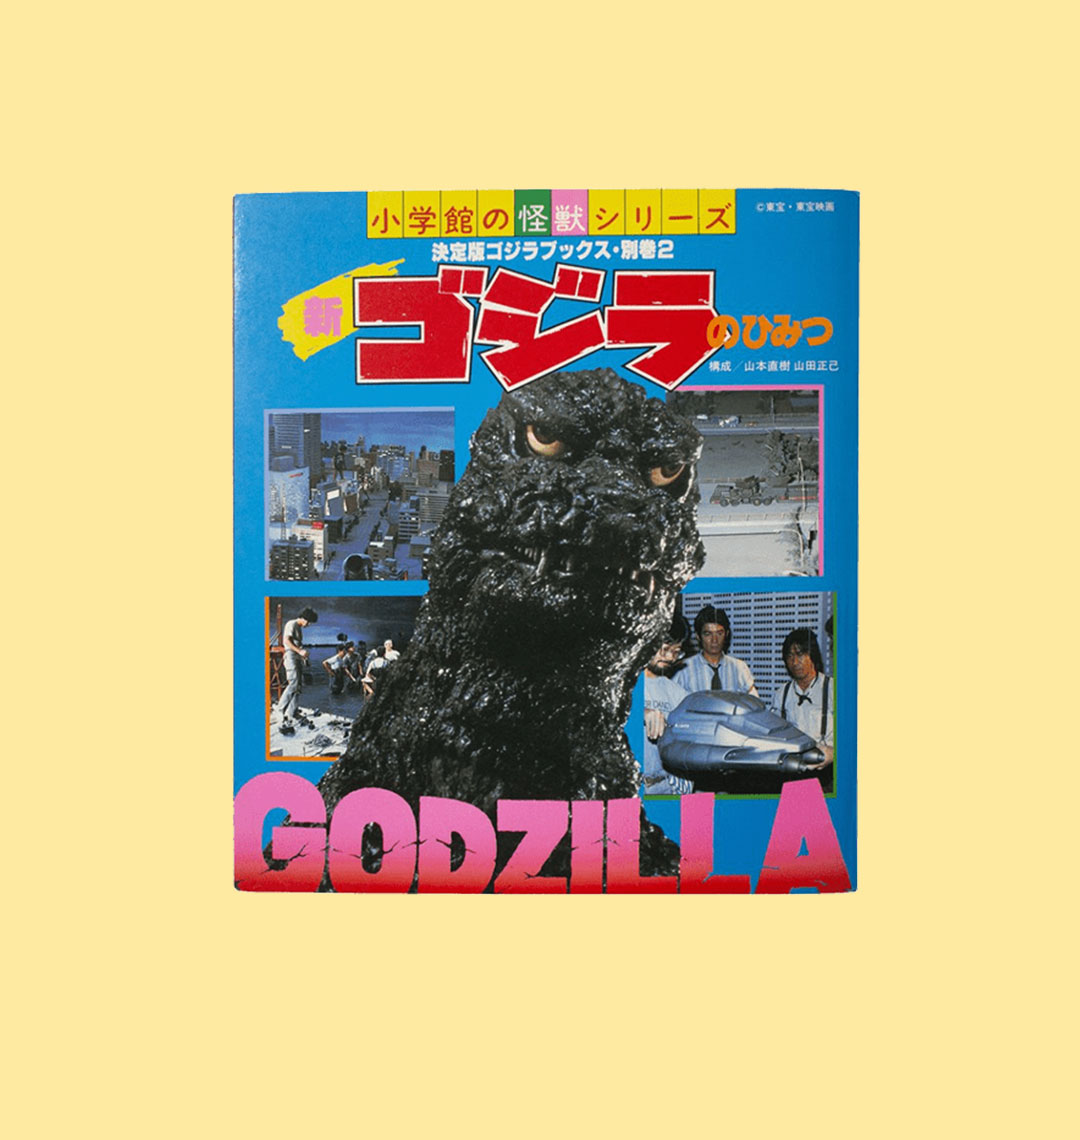 MyKaiju Godzilla Blog Post